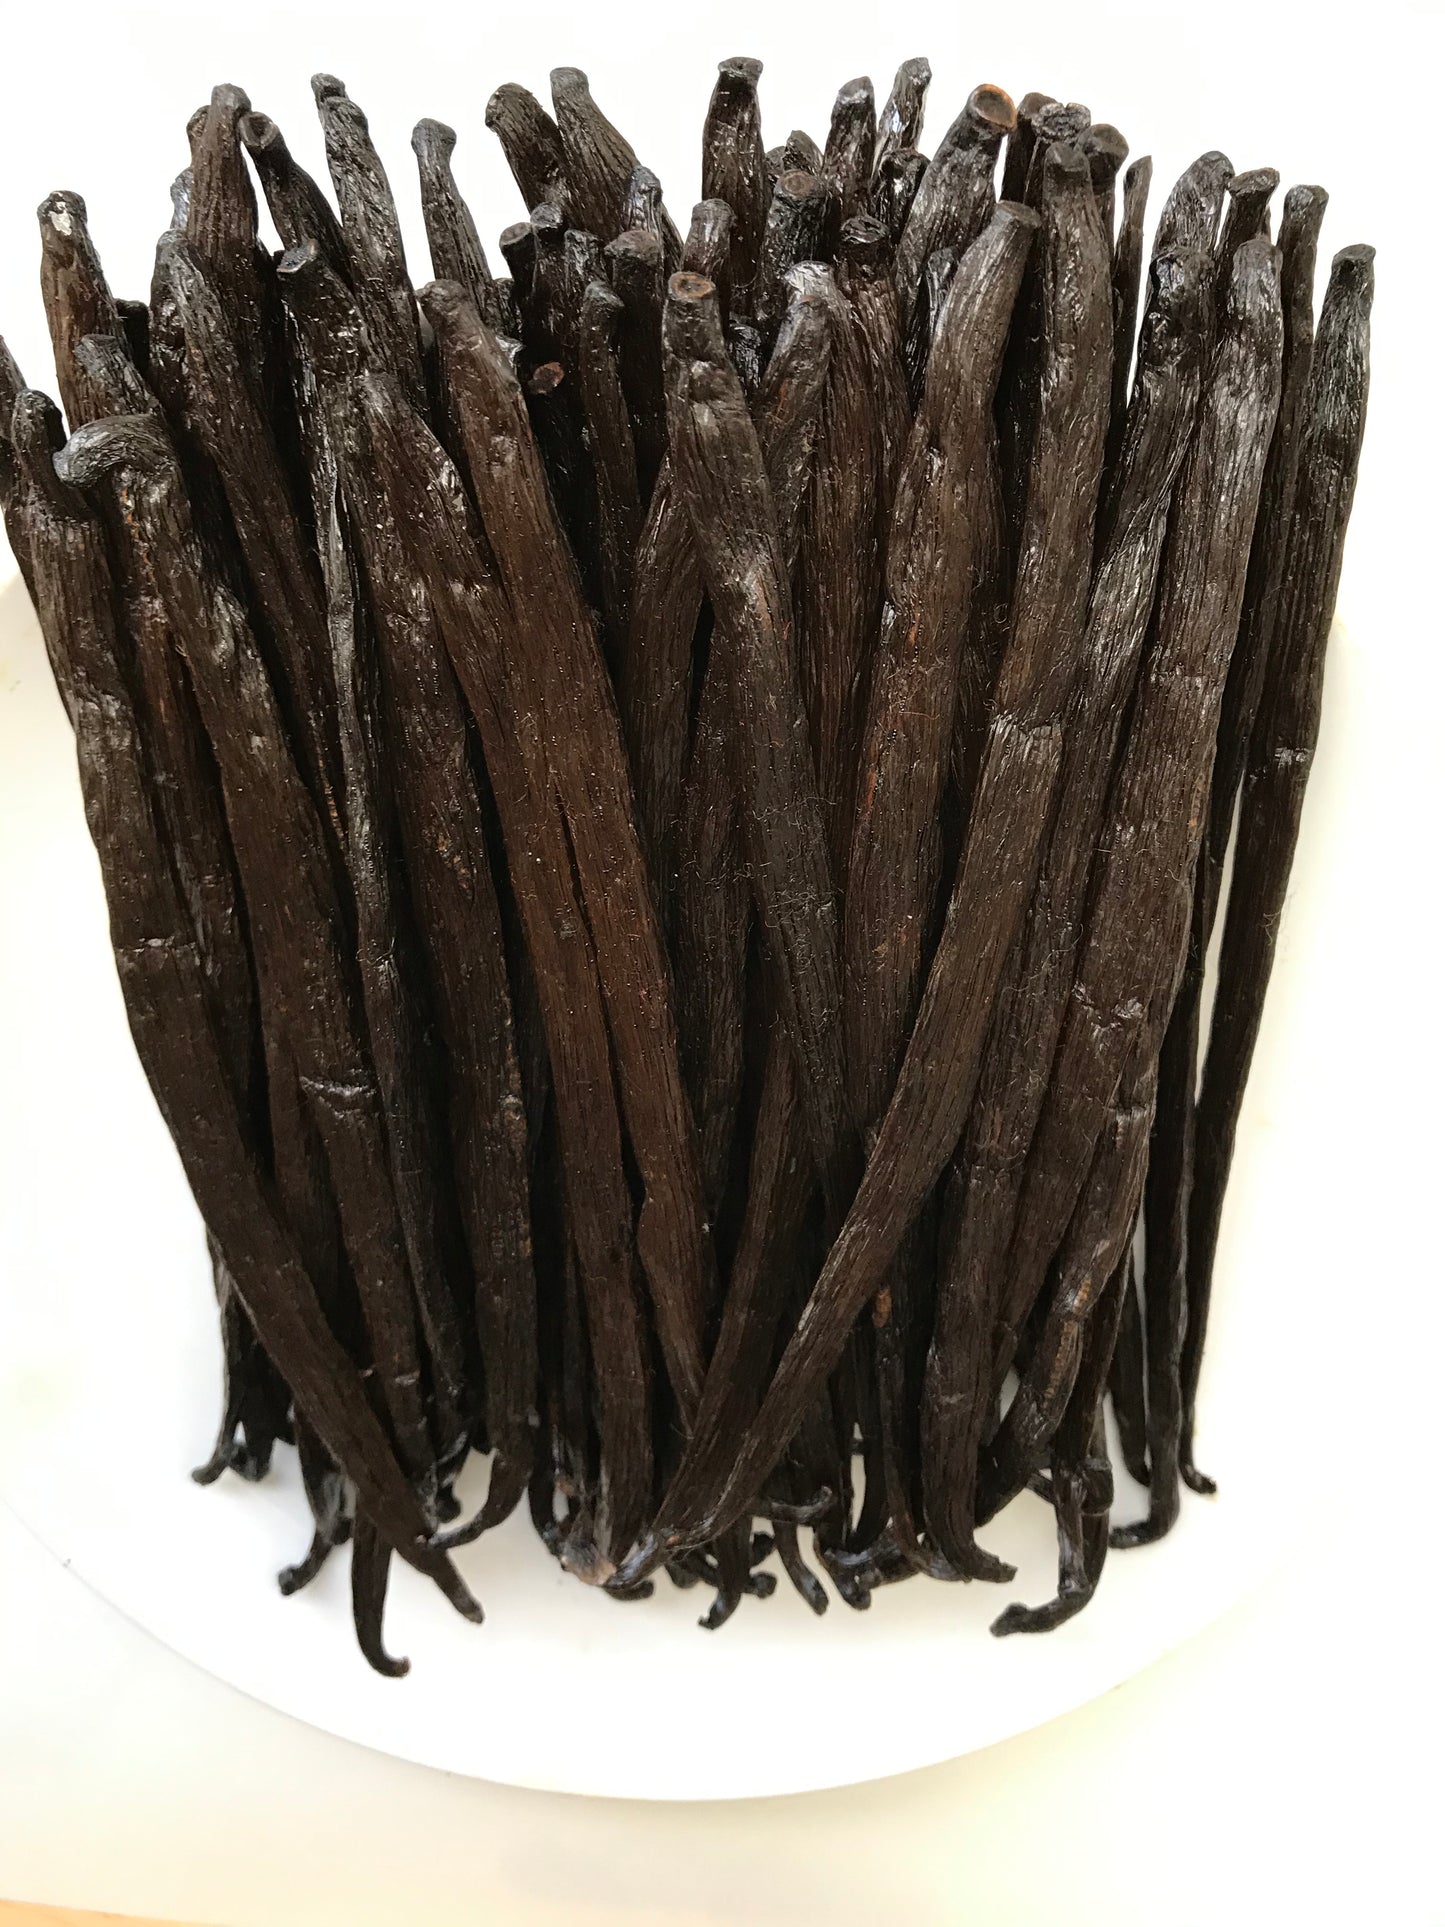 Ugandan Planifolia Vanilla Beans Grade A (By Count)